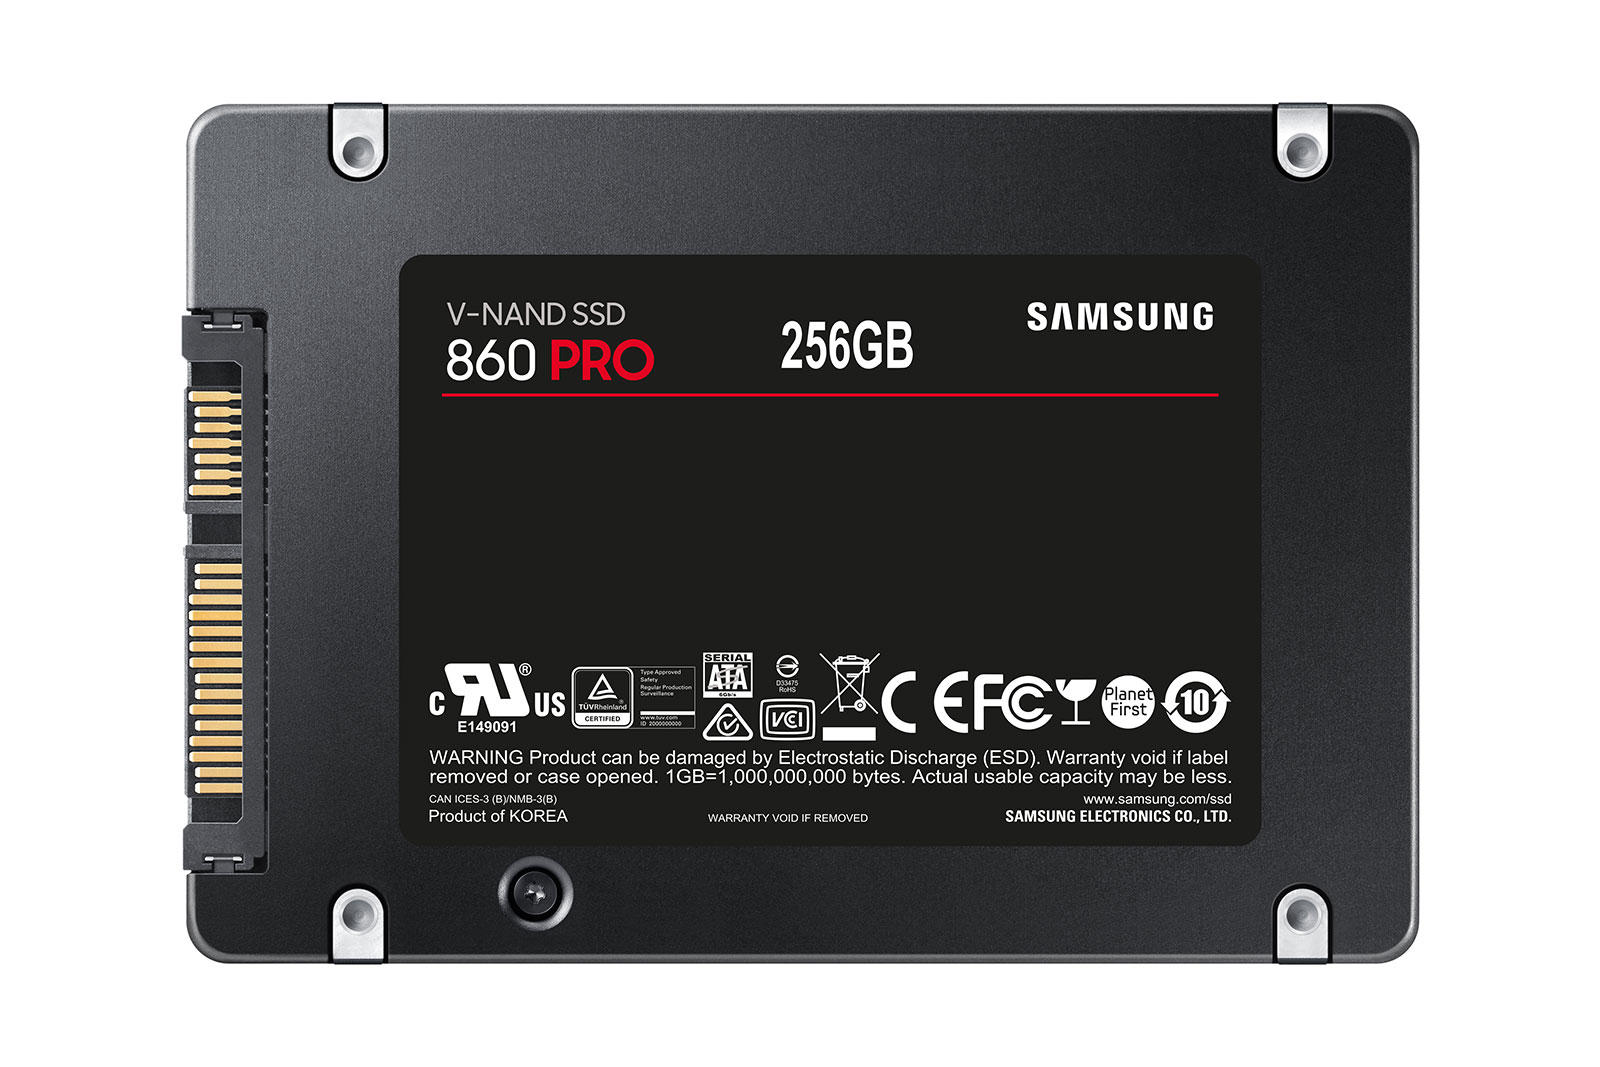 par Kilauea Mountain ur SSD 860 PRO 2.5" SATA III 256GB Memory & Storage - MZ-76P256BW | Samsung US